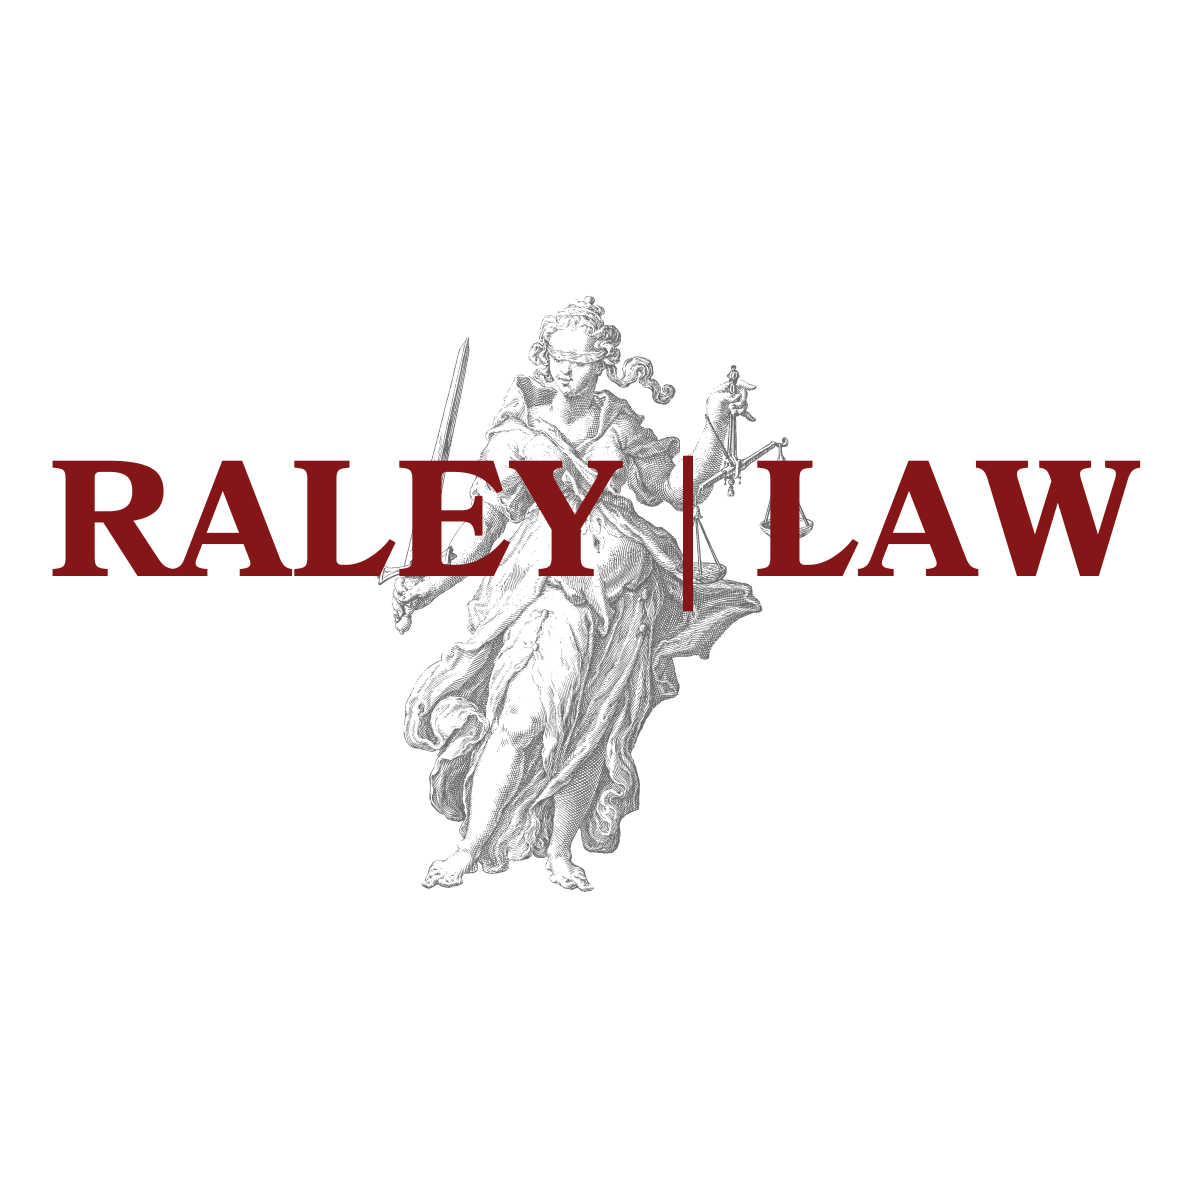 RALEY LAW